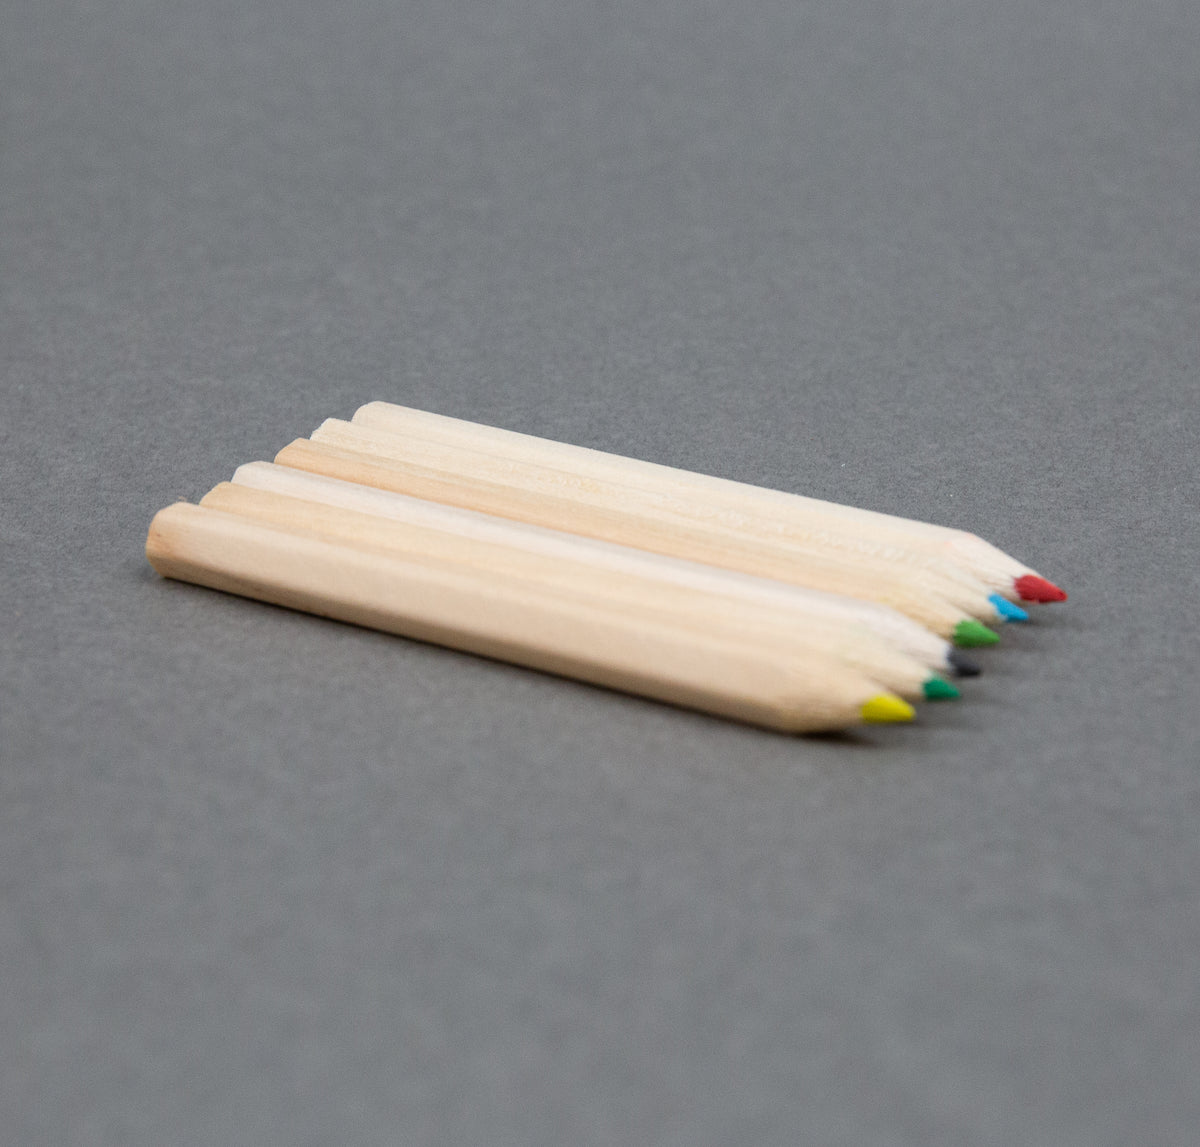 Art Explorer Pencil Crayons